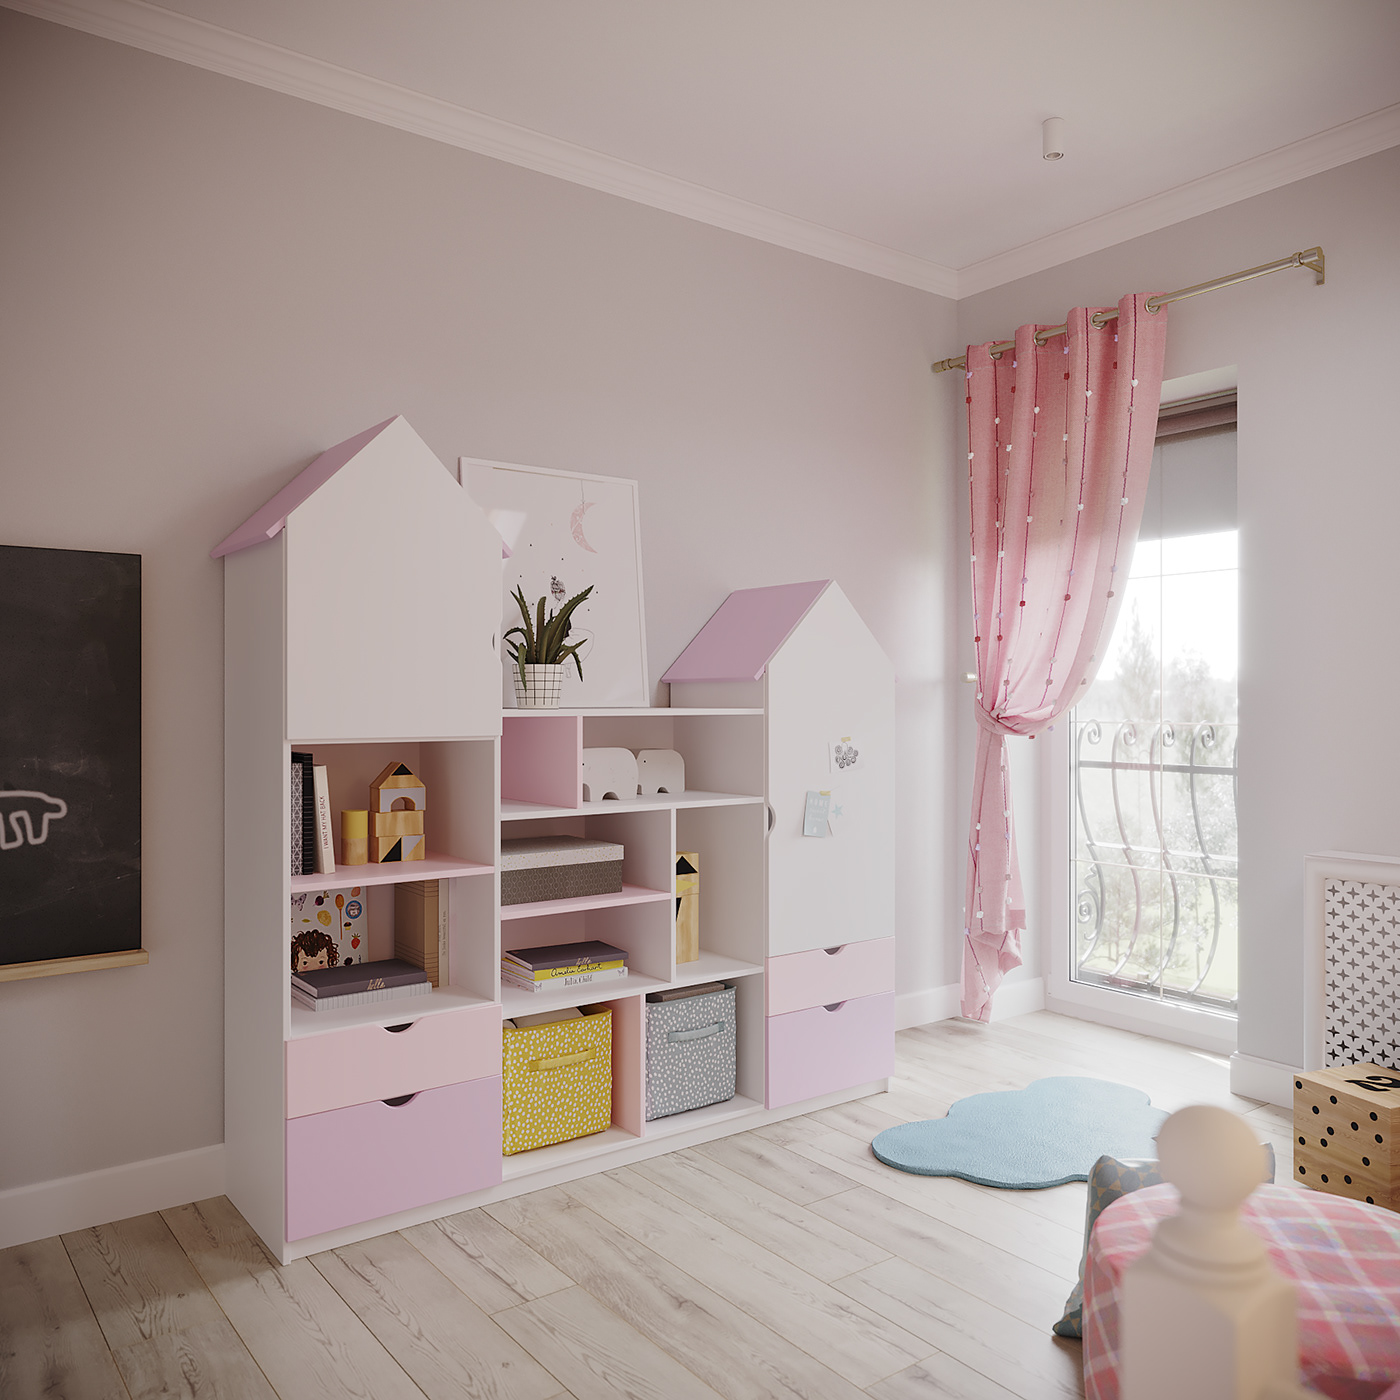 private house kitchen livingroom bedroom playroom Children’s son's room  Daughter's room bathroom dressroom